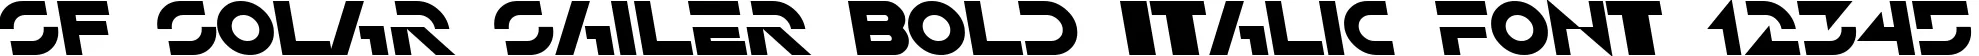 Dynamic SF Solar Sailer Bold Italic Font Preview https://safirsoft.com